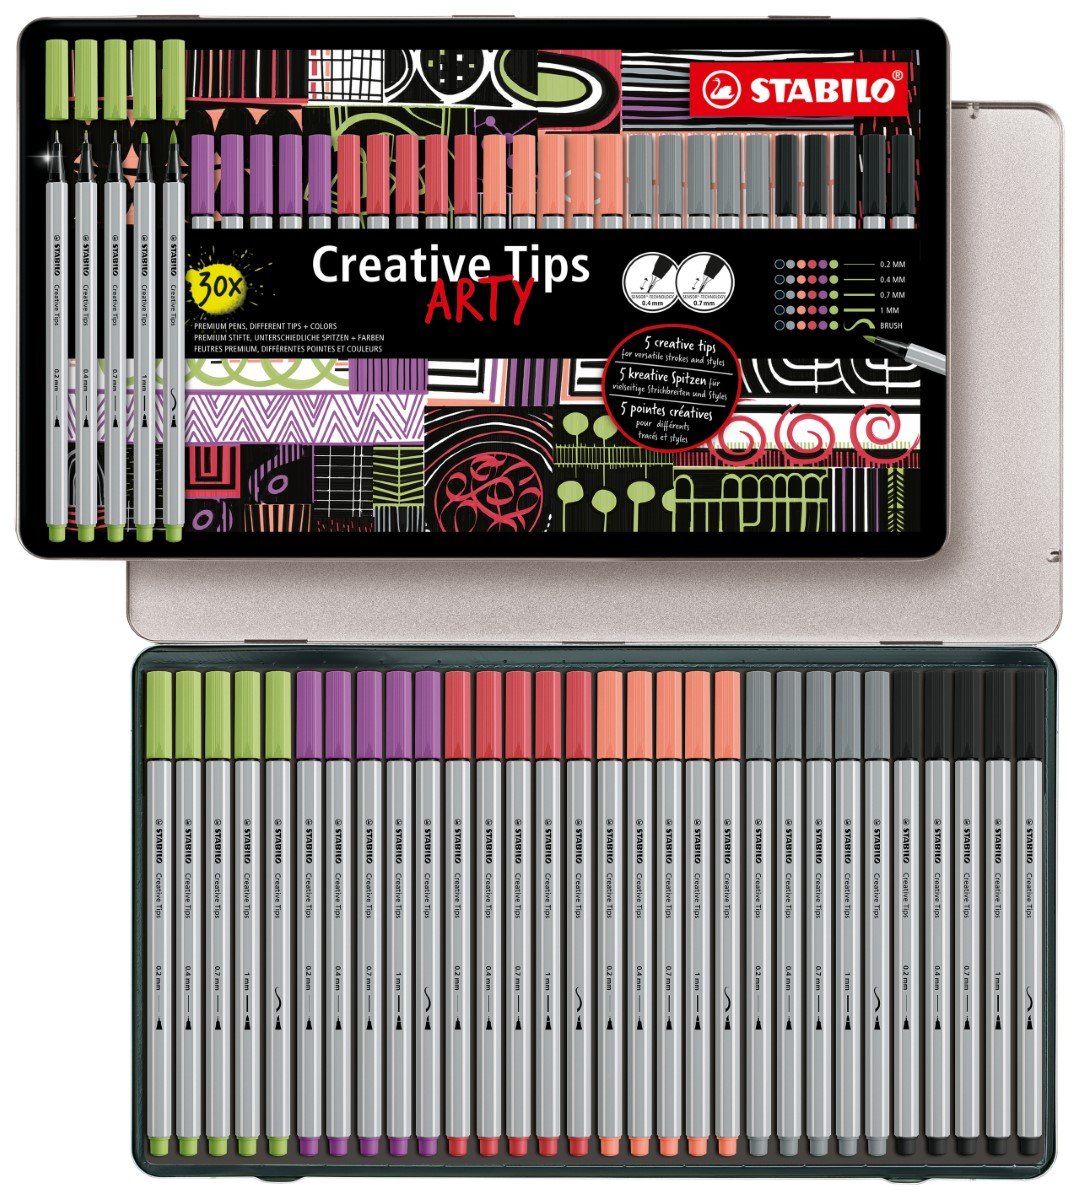 Zestaw STABILO Creative Tips ARTY kolory pastelowe metalowe etui 30 szt.